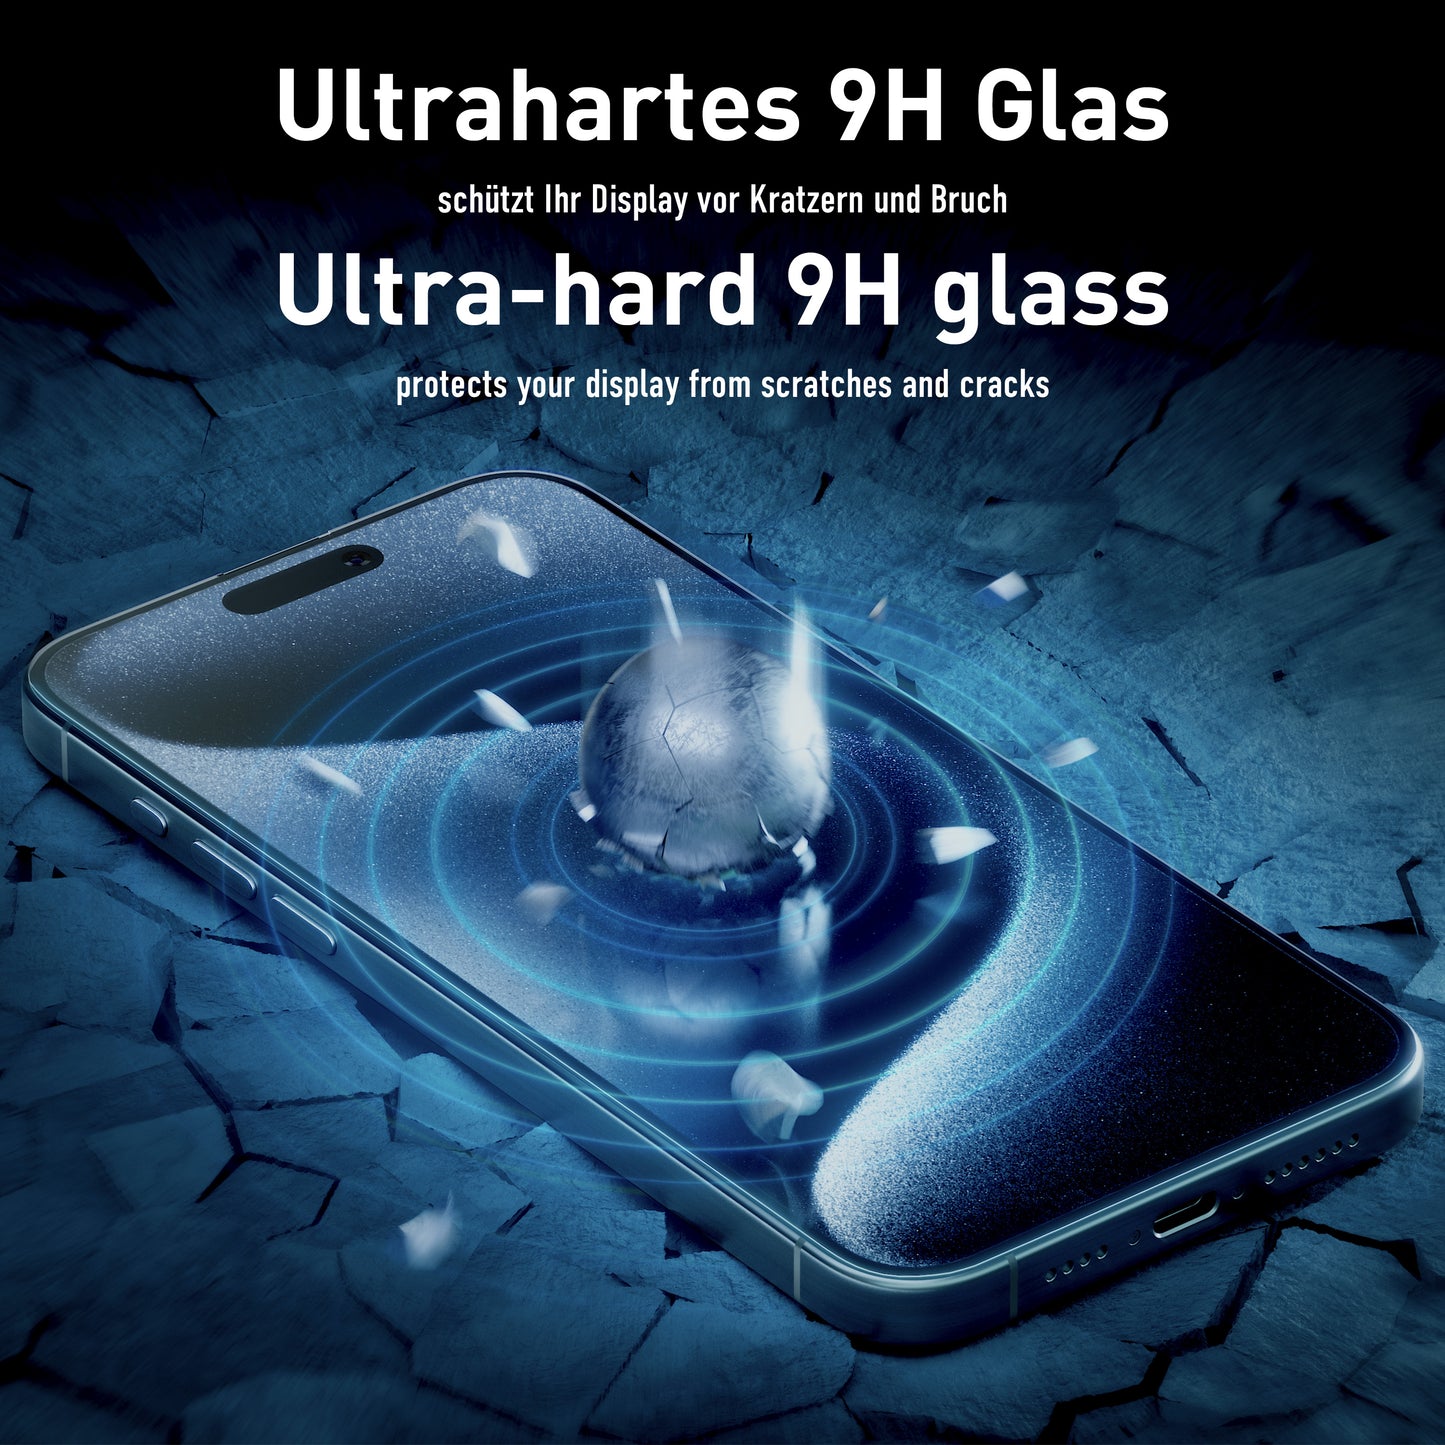 smartect Schutzglas Privacy für Apple iPhone 8 / iPhone 7 / iPhone 6 / 6s, 2 Stück